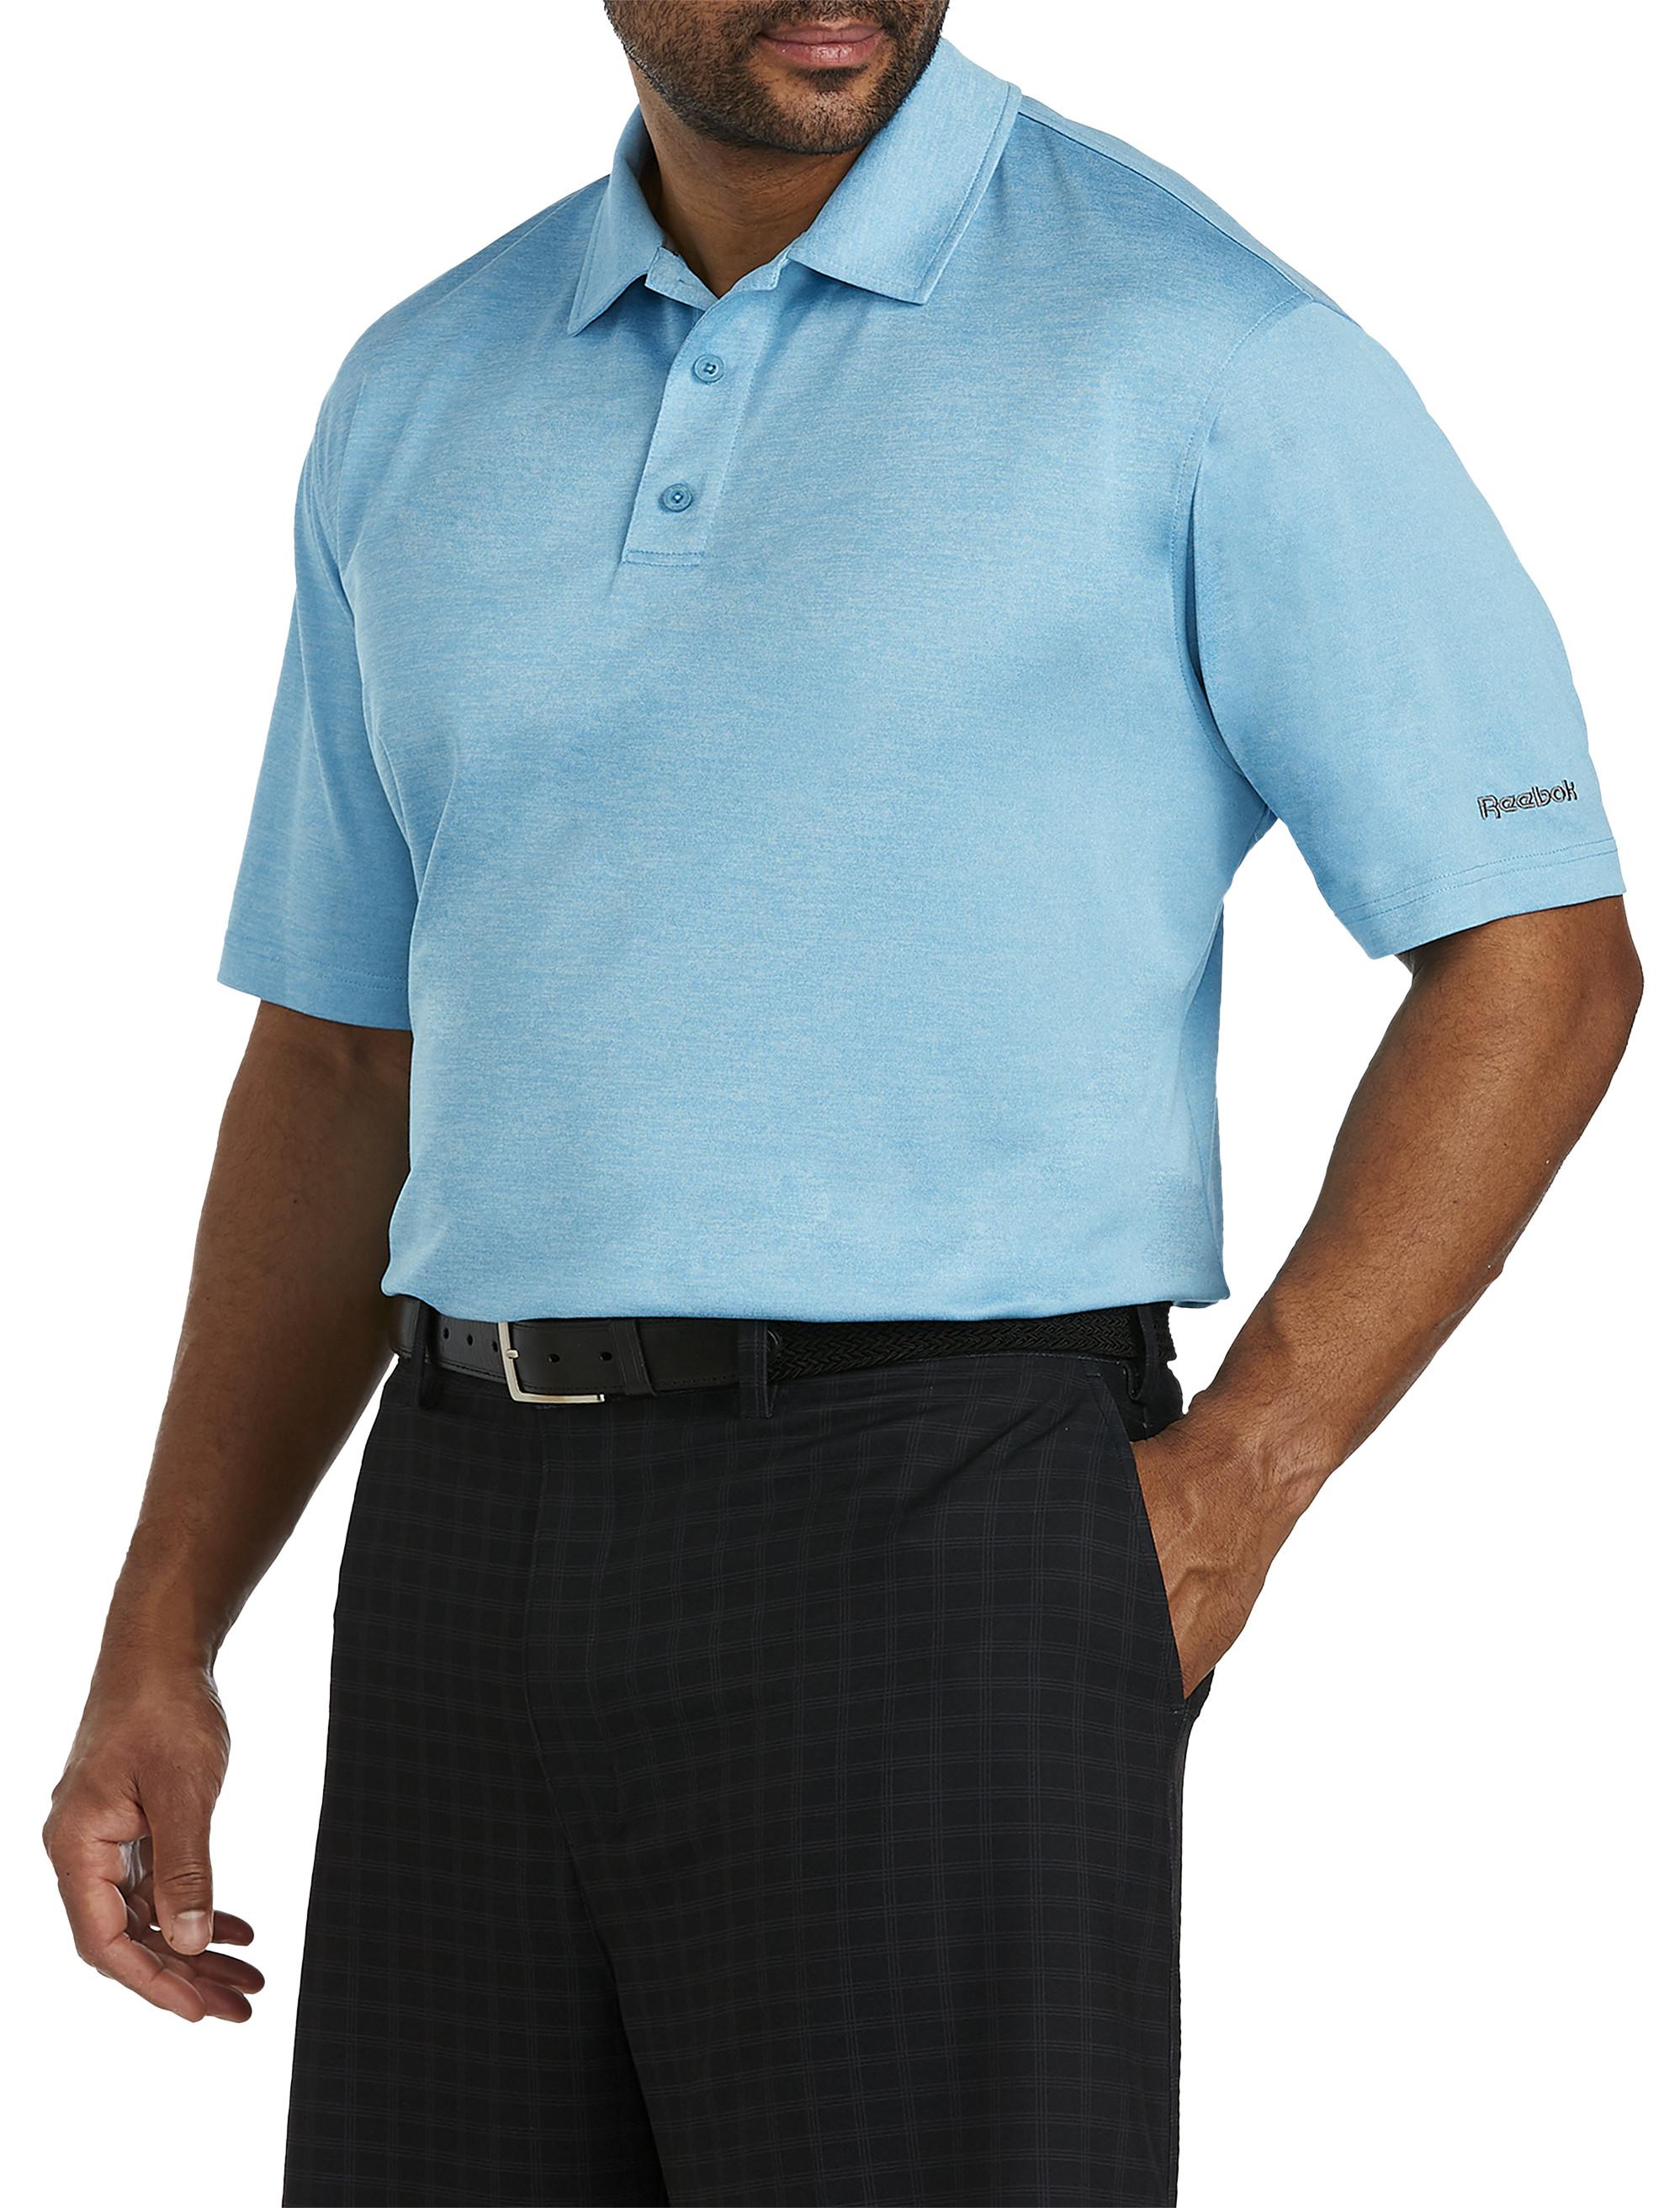 Reebok Big & Tall Speedwick Heather Polo Shirt in Blue for Men - Lyst